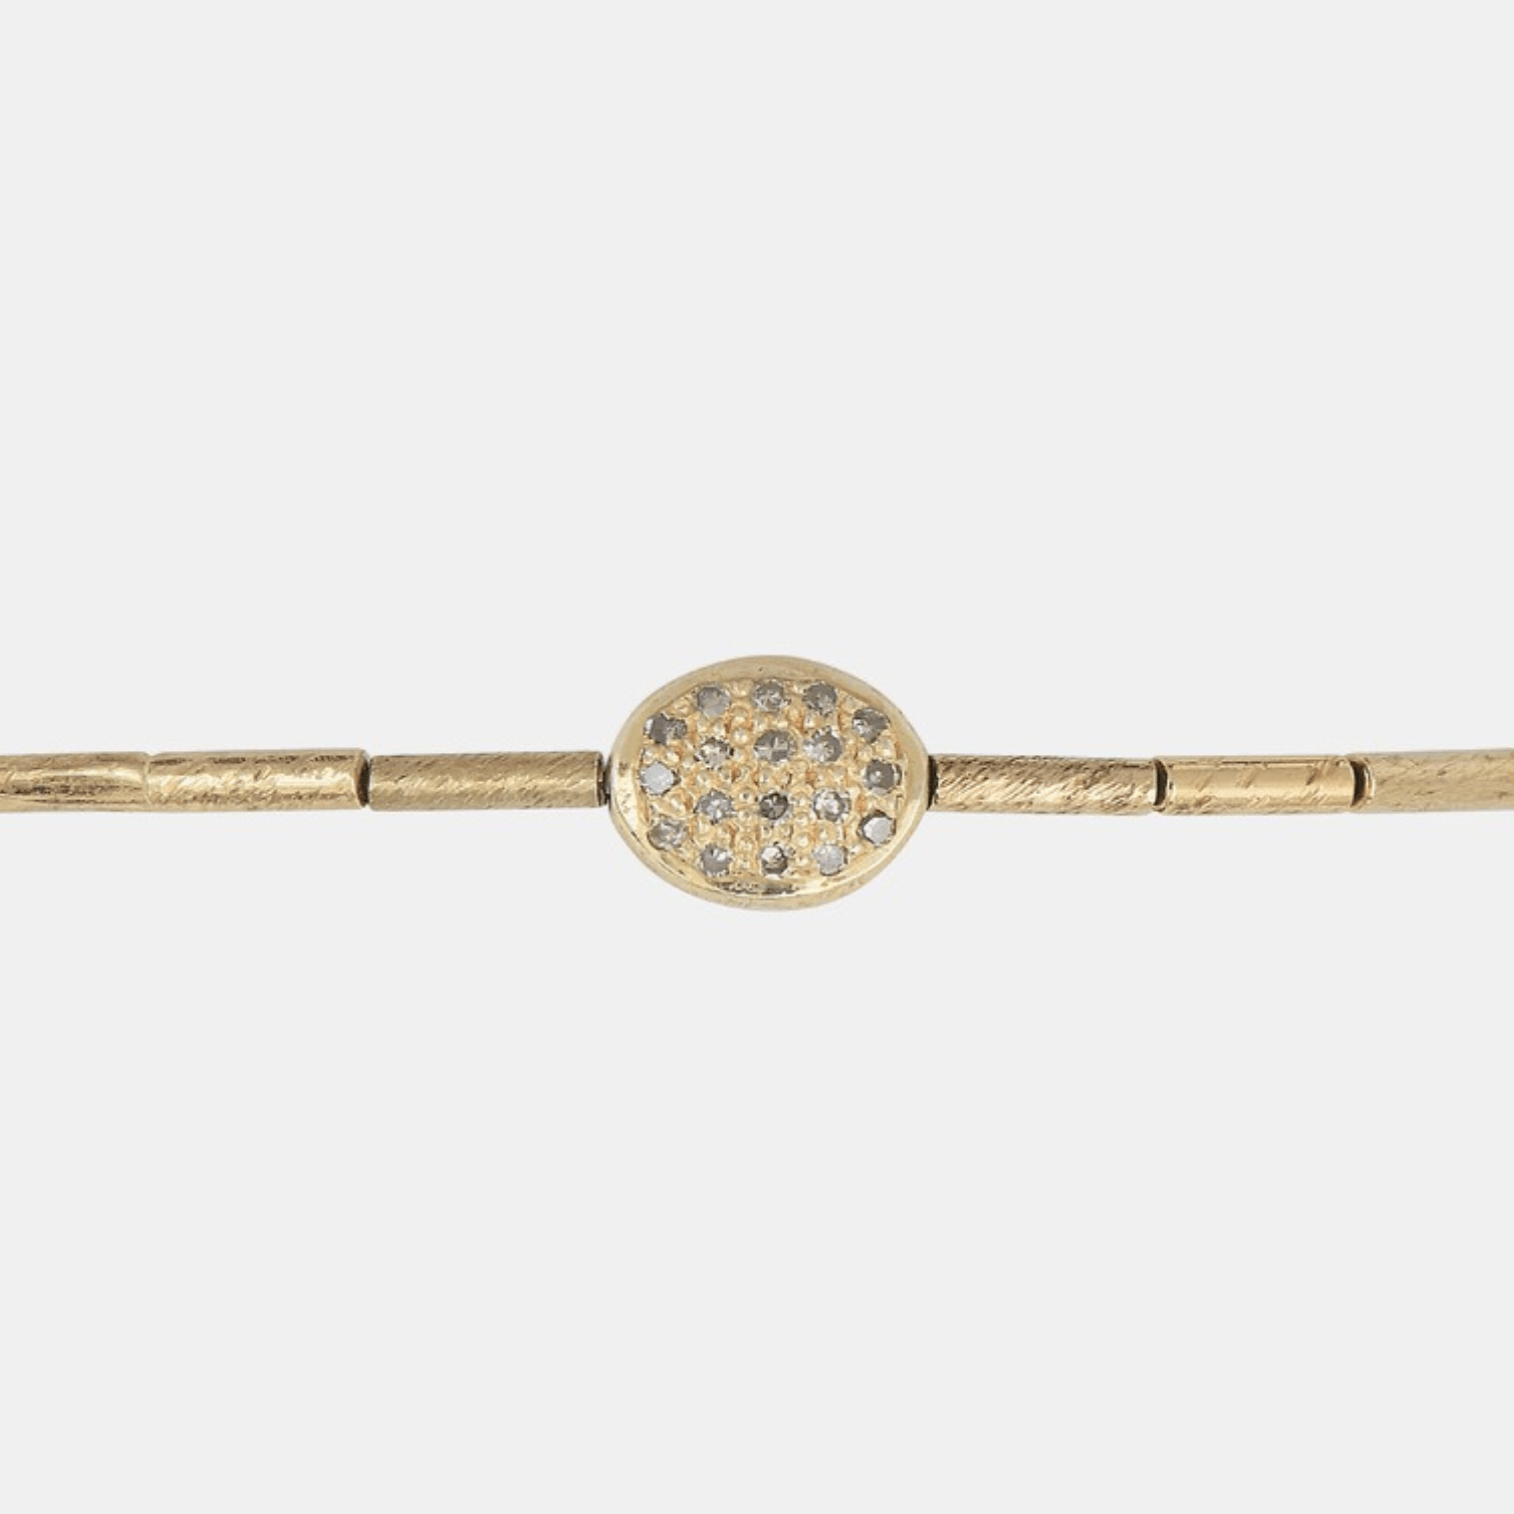 5 Octobre Jewelry Gold / Small Artus Bracelet